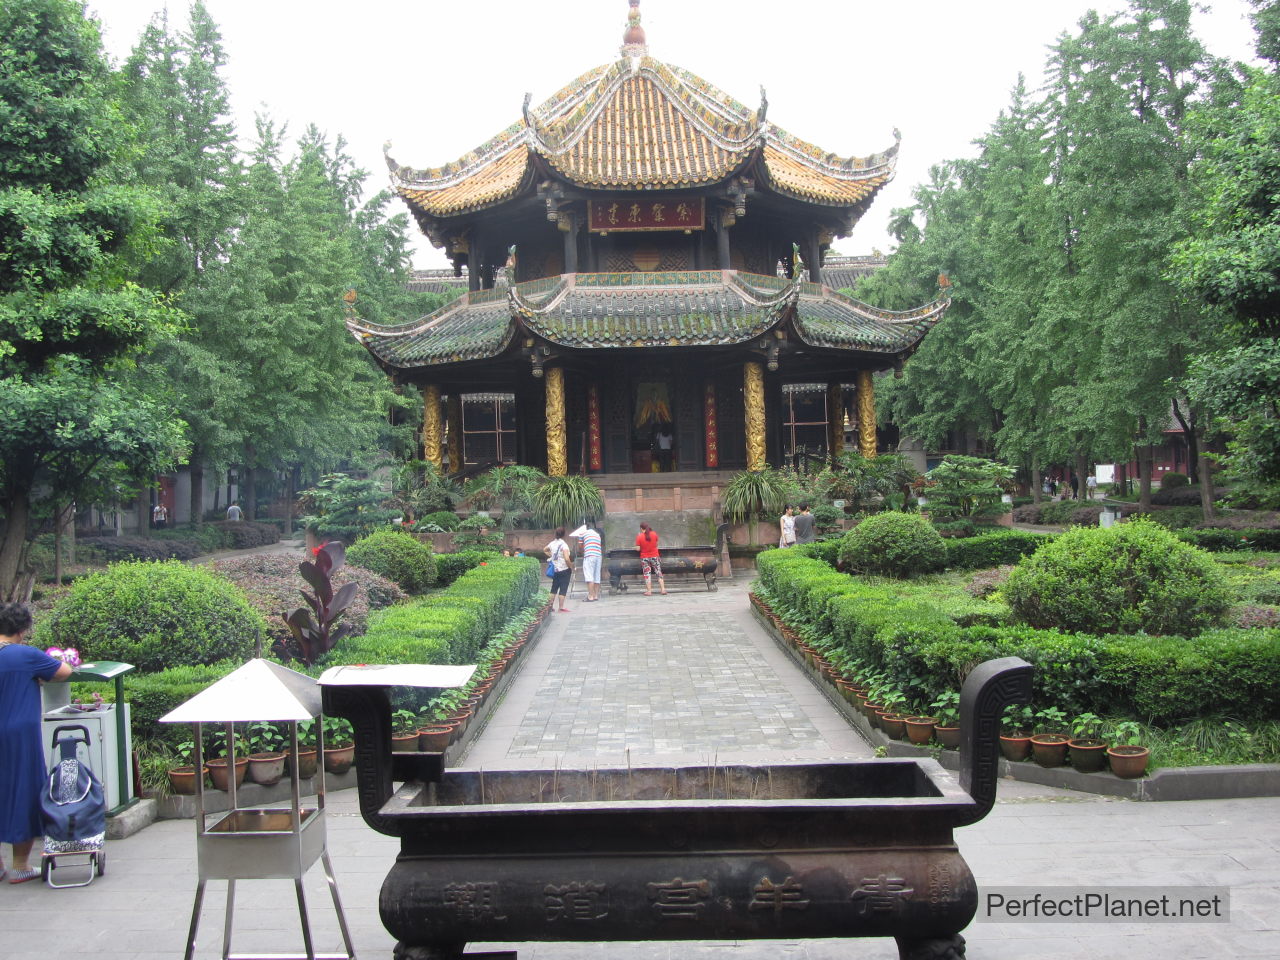 Qinyang Gong Palace or Green Ram Temple